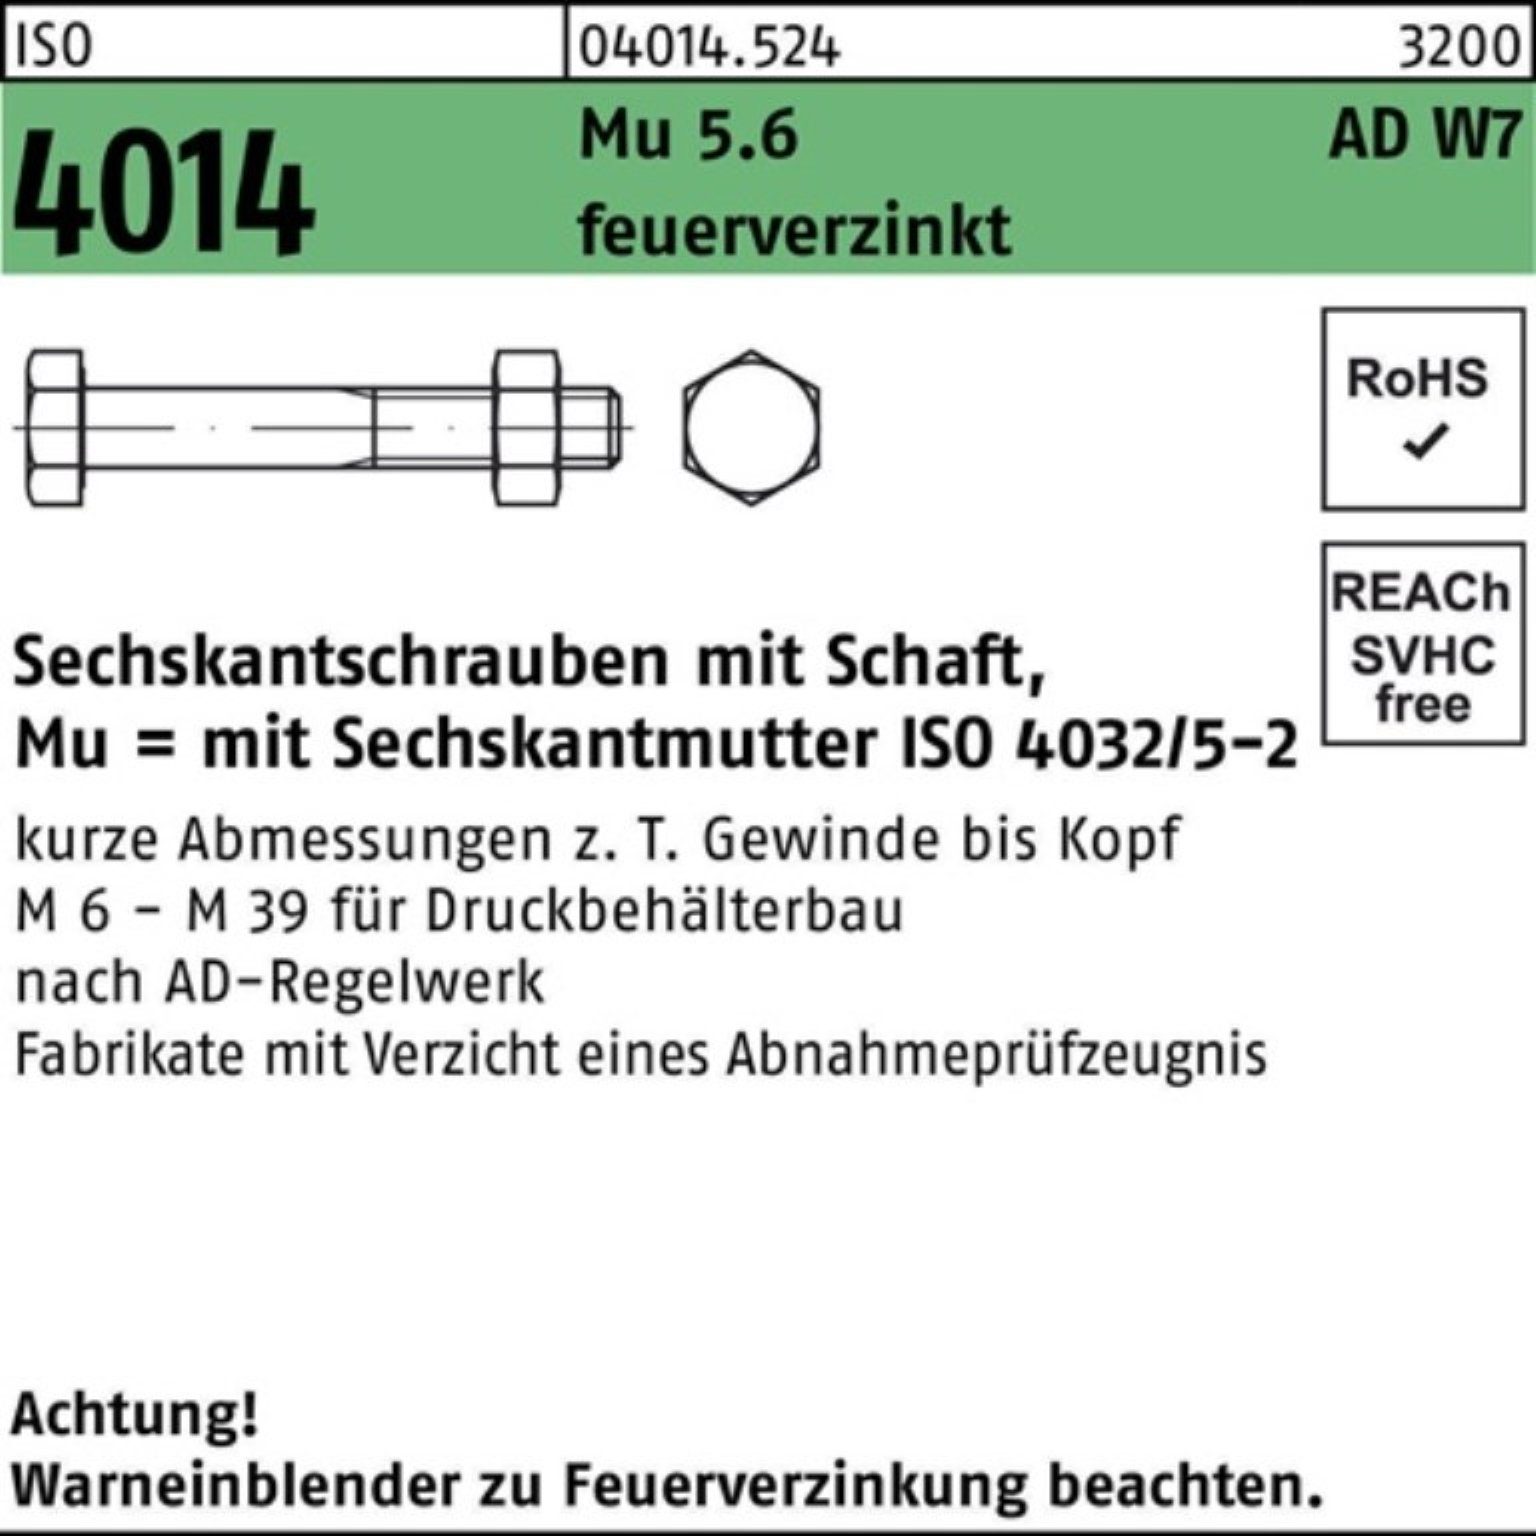 Bufab Sechskantschraube 100er 110 4014 5.6 Pack ISO feuerv Mu M24x Schaft W7 Sechskantschraube